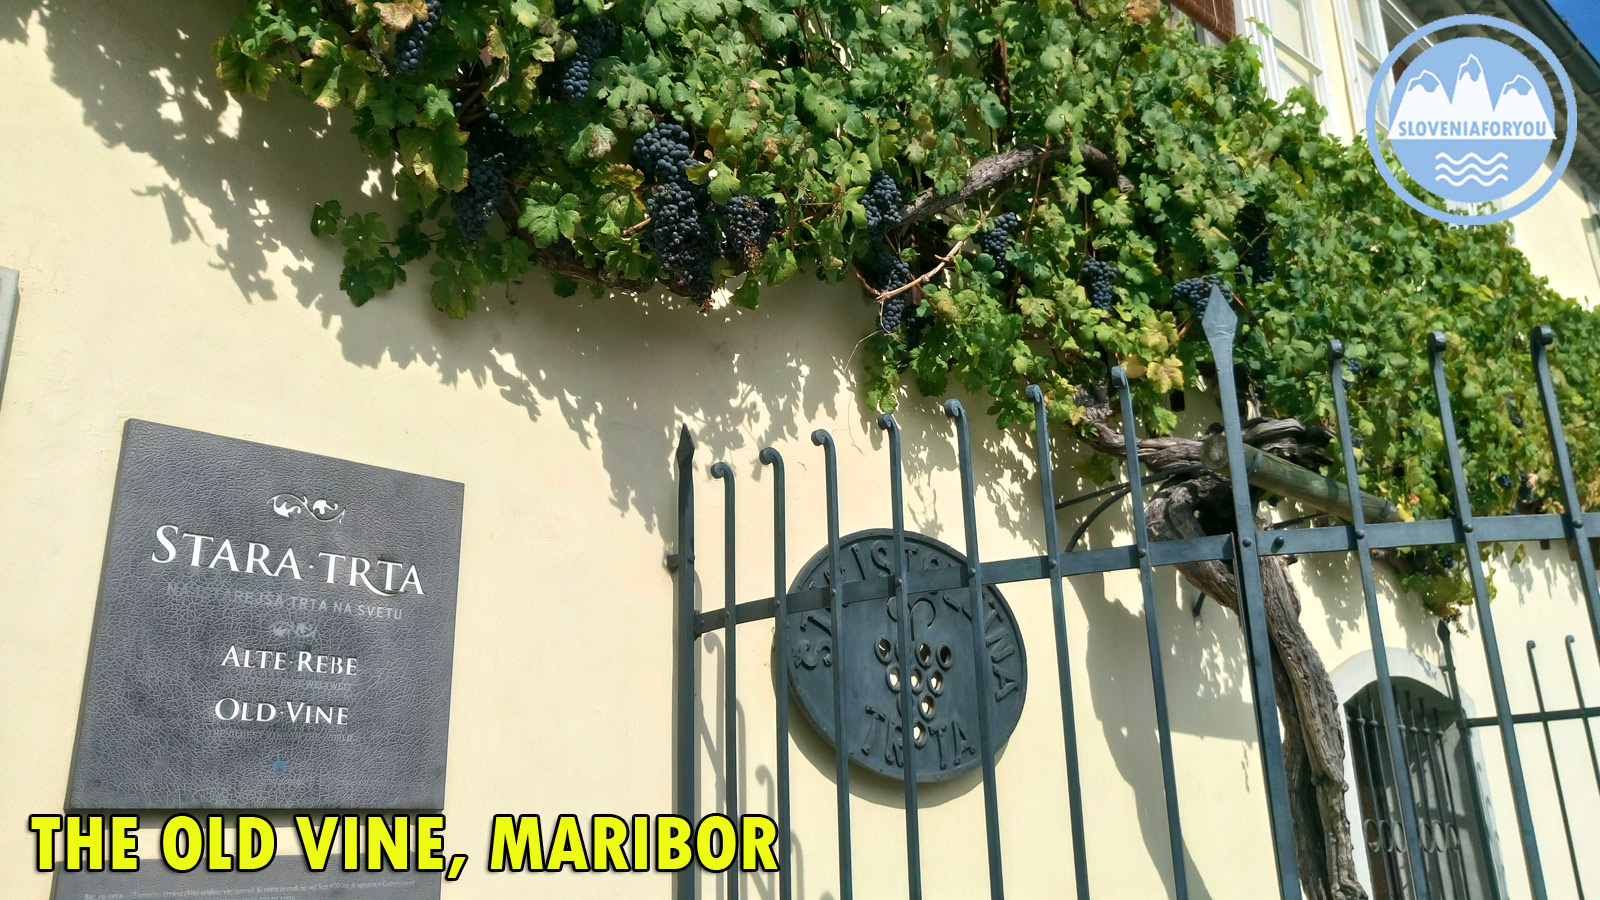 Old Vine in Maribor, Sloveniaforyou